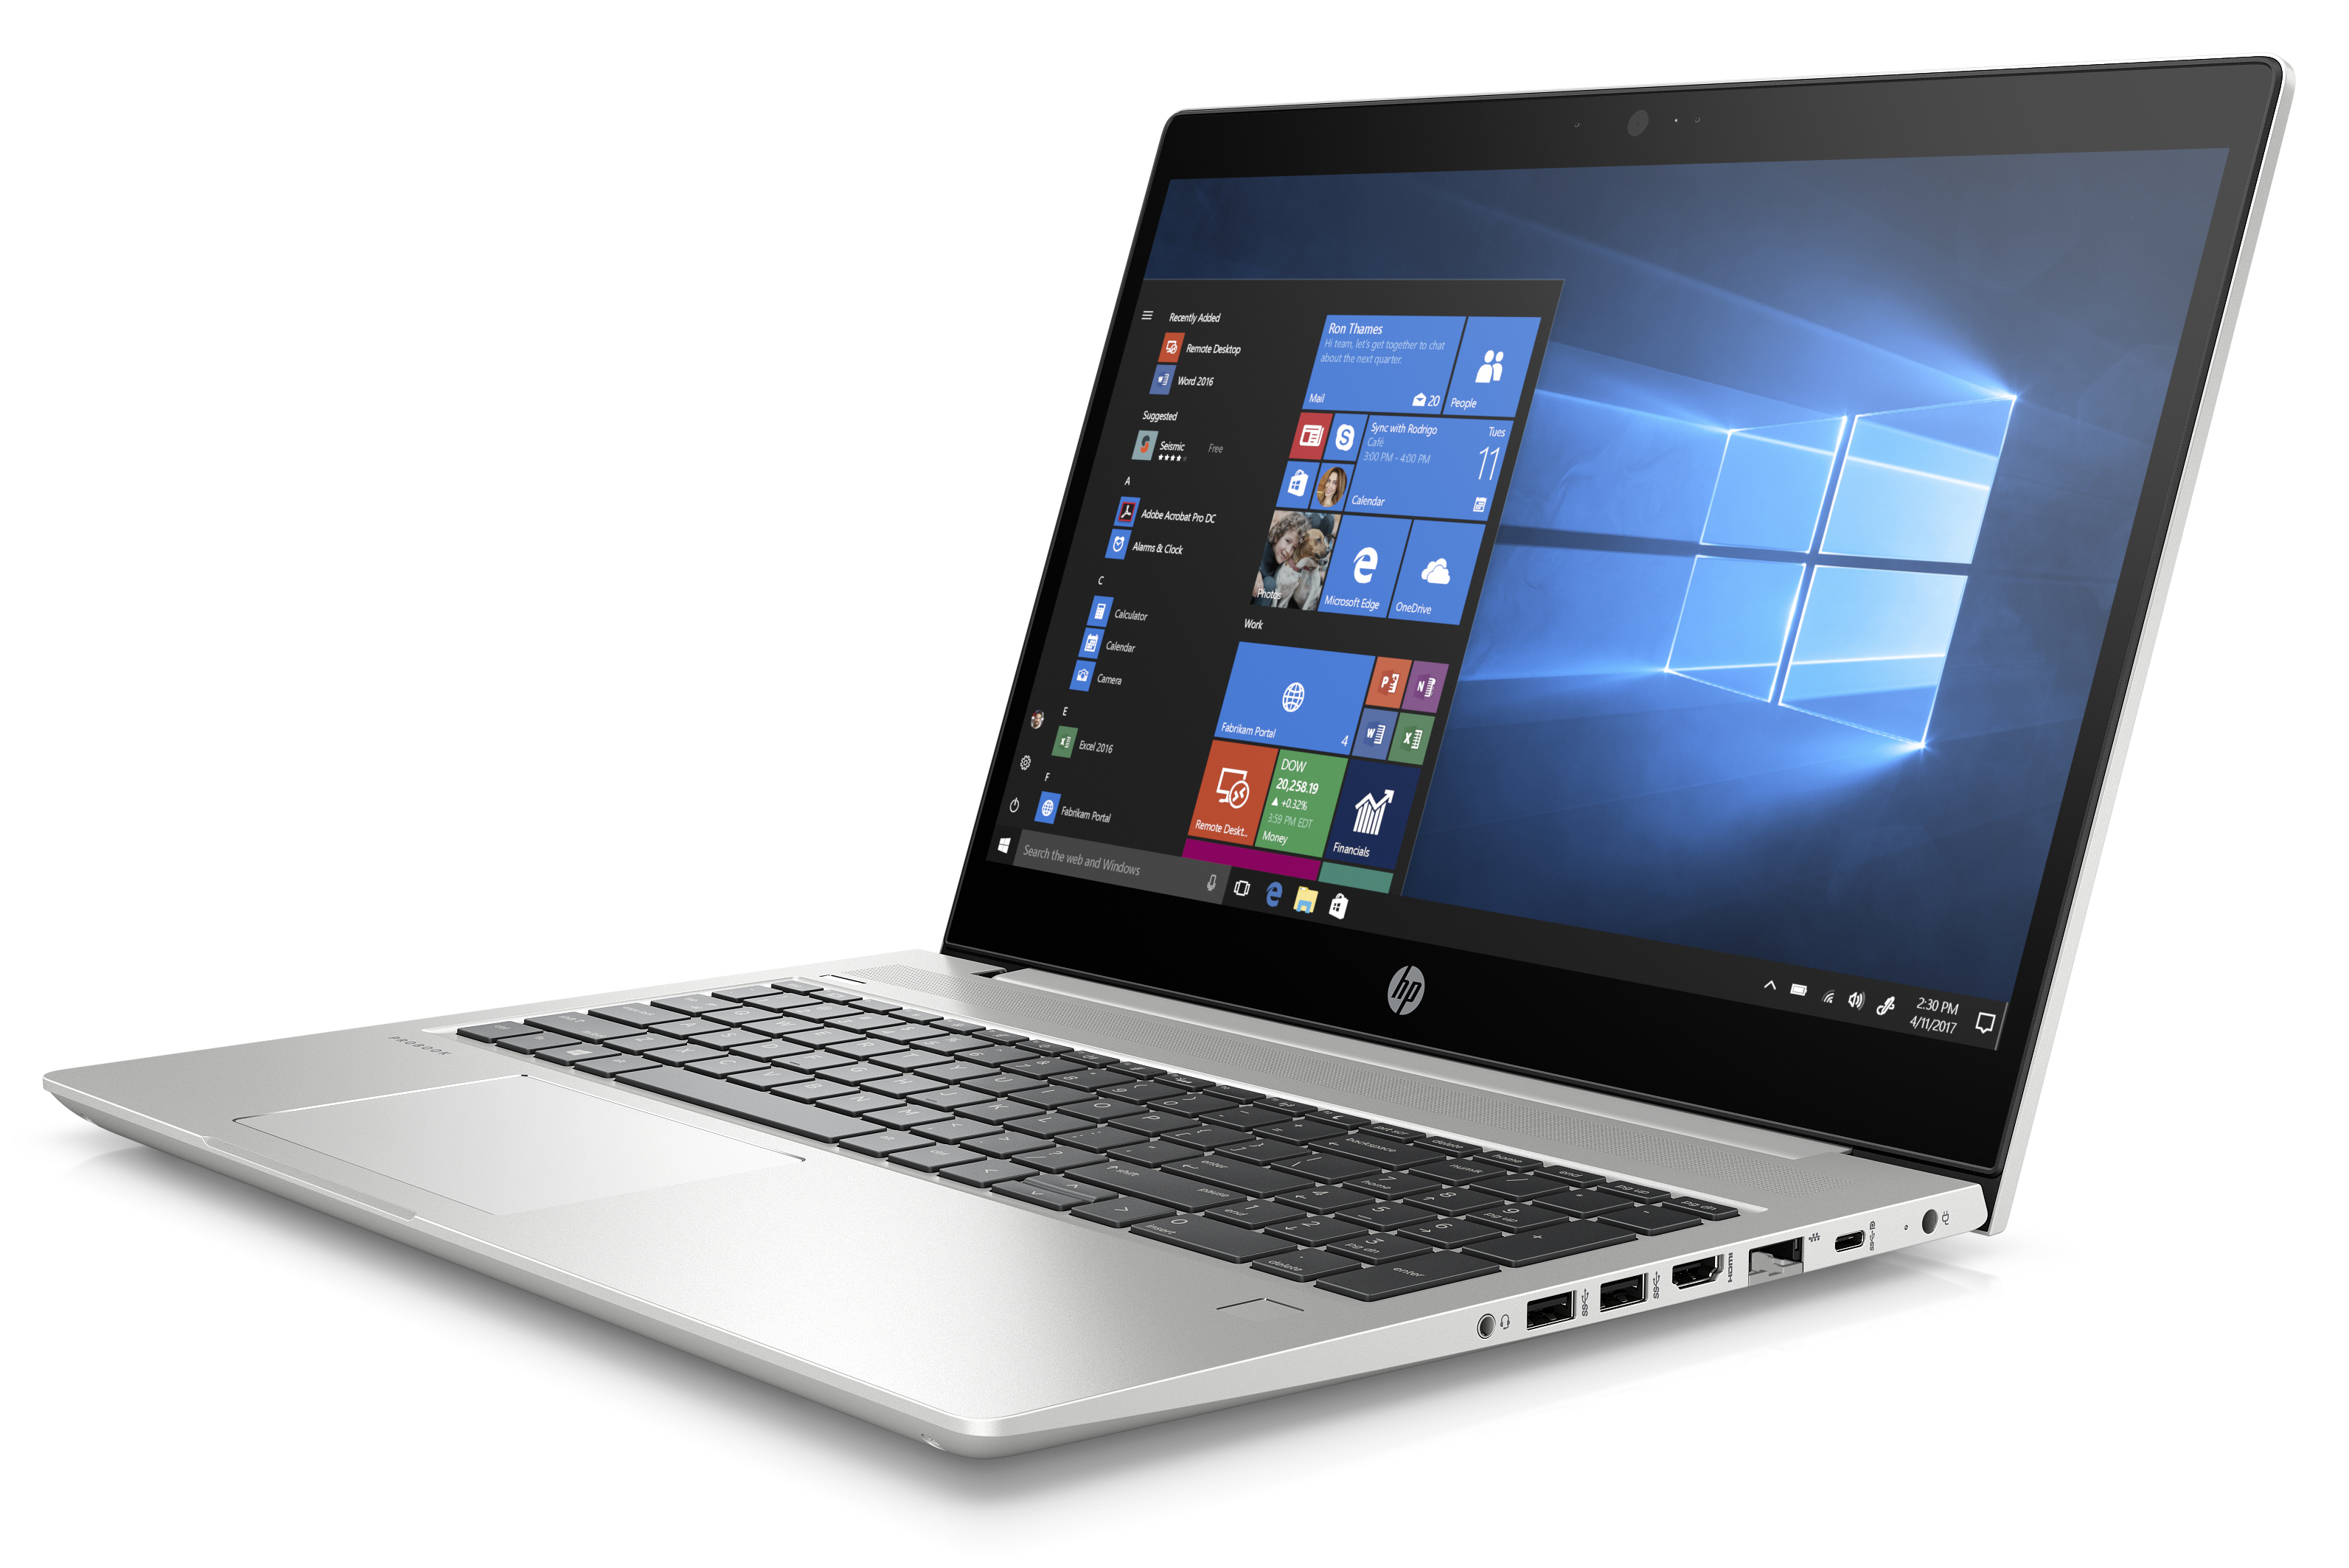 【Windows11】 【薄型】 【テレワークに最適】 HP ProBook 450 G6 第8世代 Core i5 8265U/1.60GHz 4GB 新品SSD480GB M.2 64bit WPSOffice 15.6インチ HD カメラ テンキー 無線LAN ノートパソコン PC